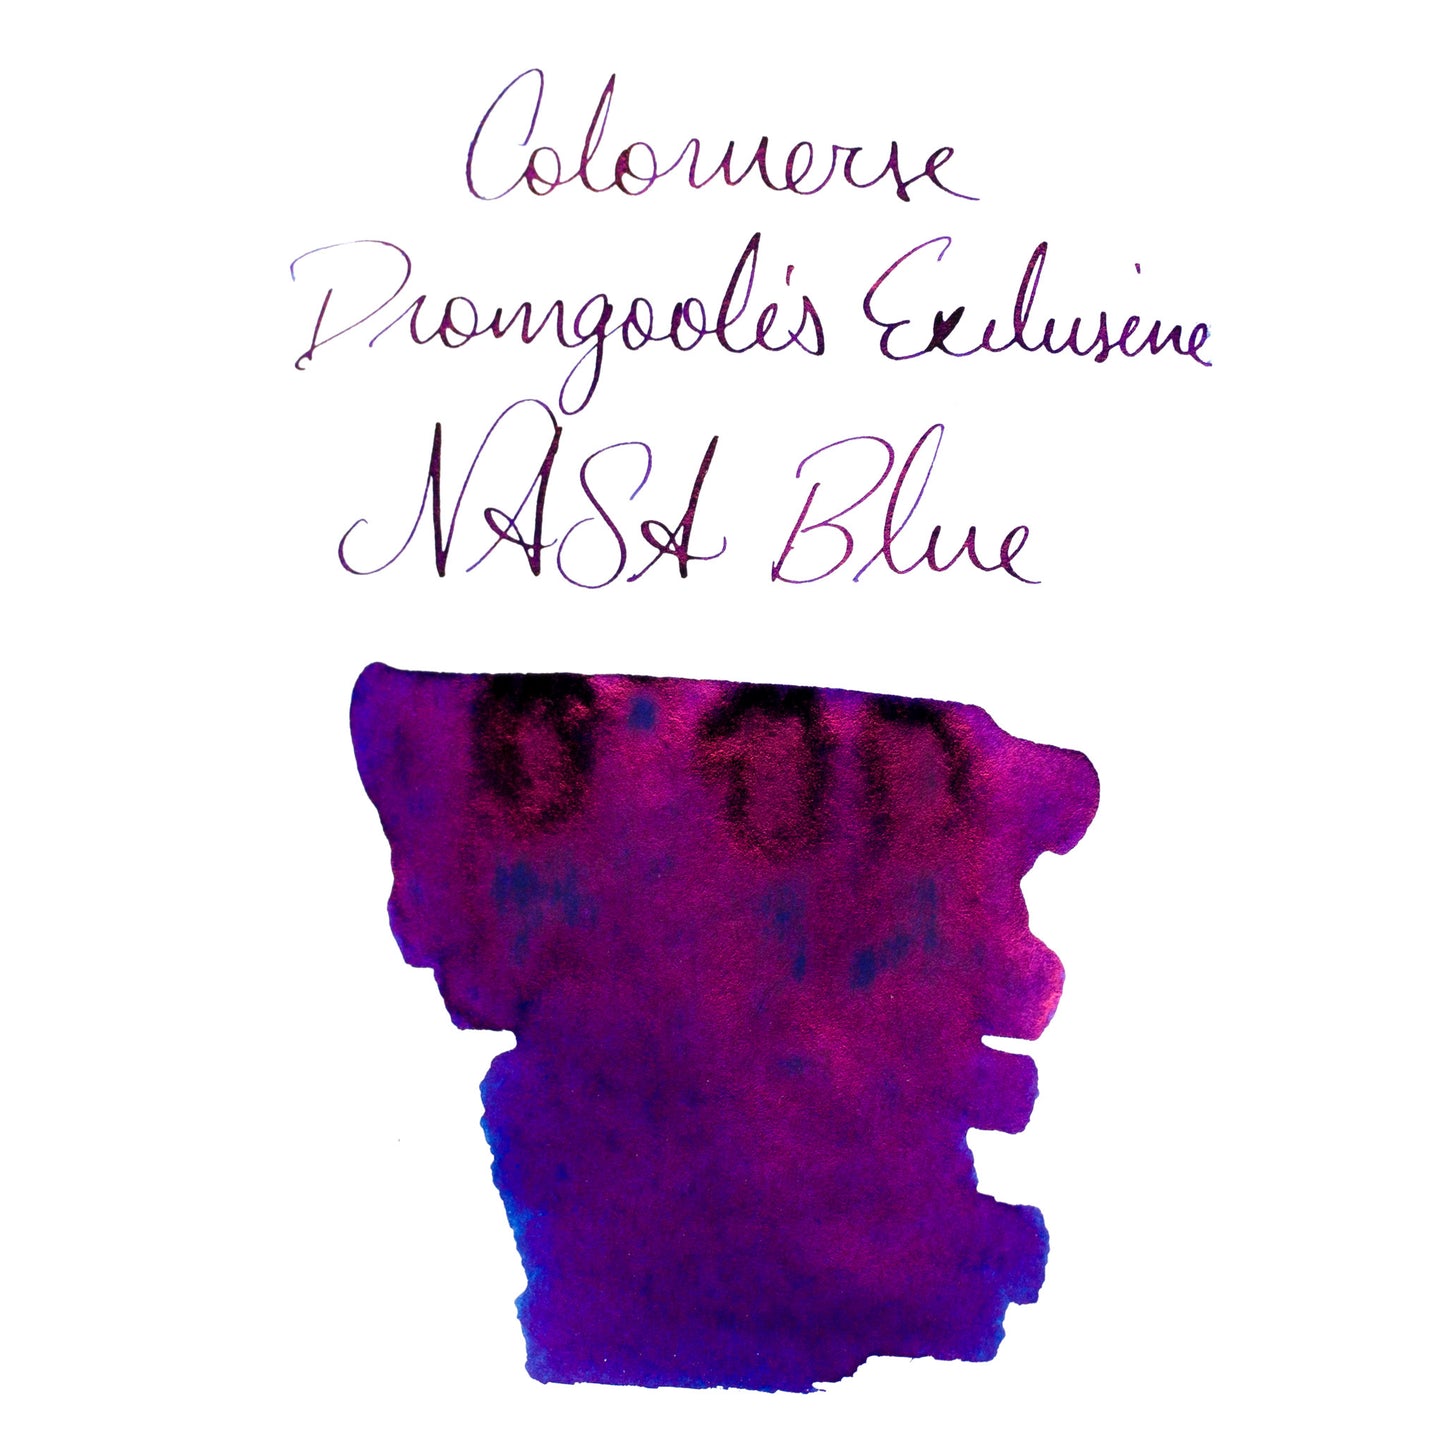 Colorverse NASA Blue (30ml) Bottled Ink (Dromgoole's Exclusive)